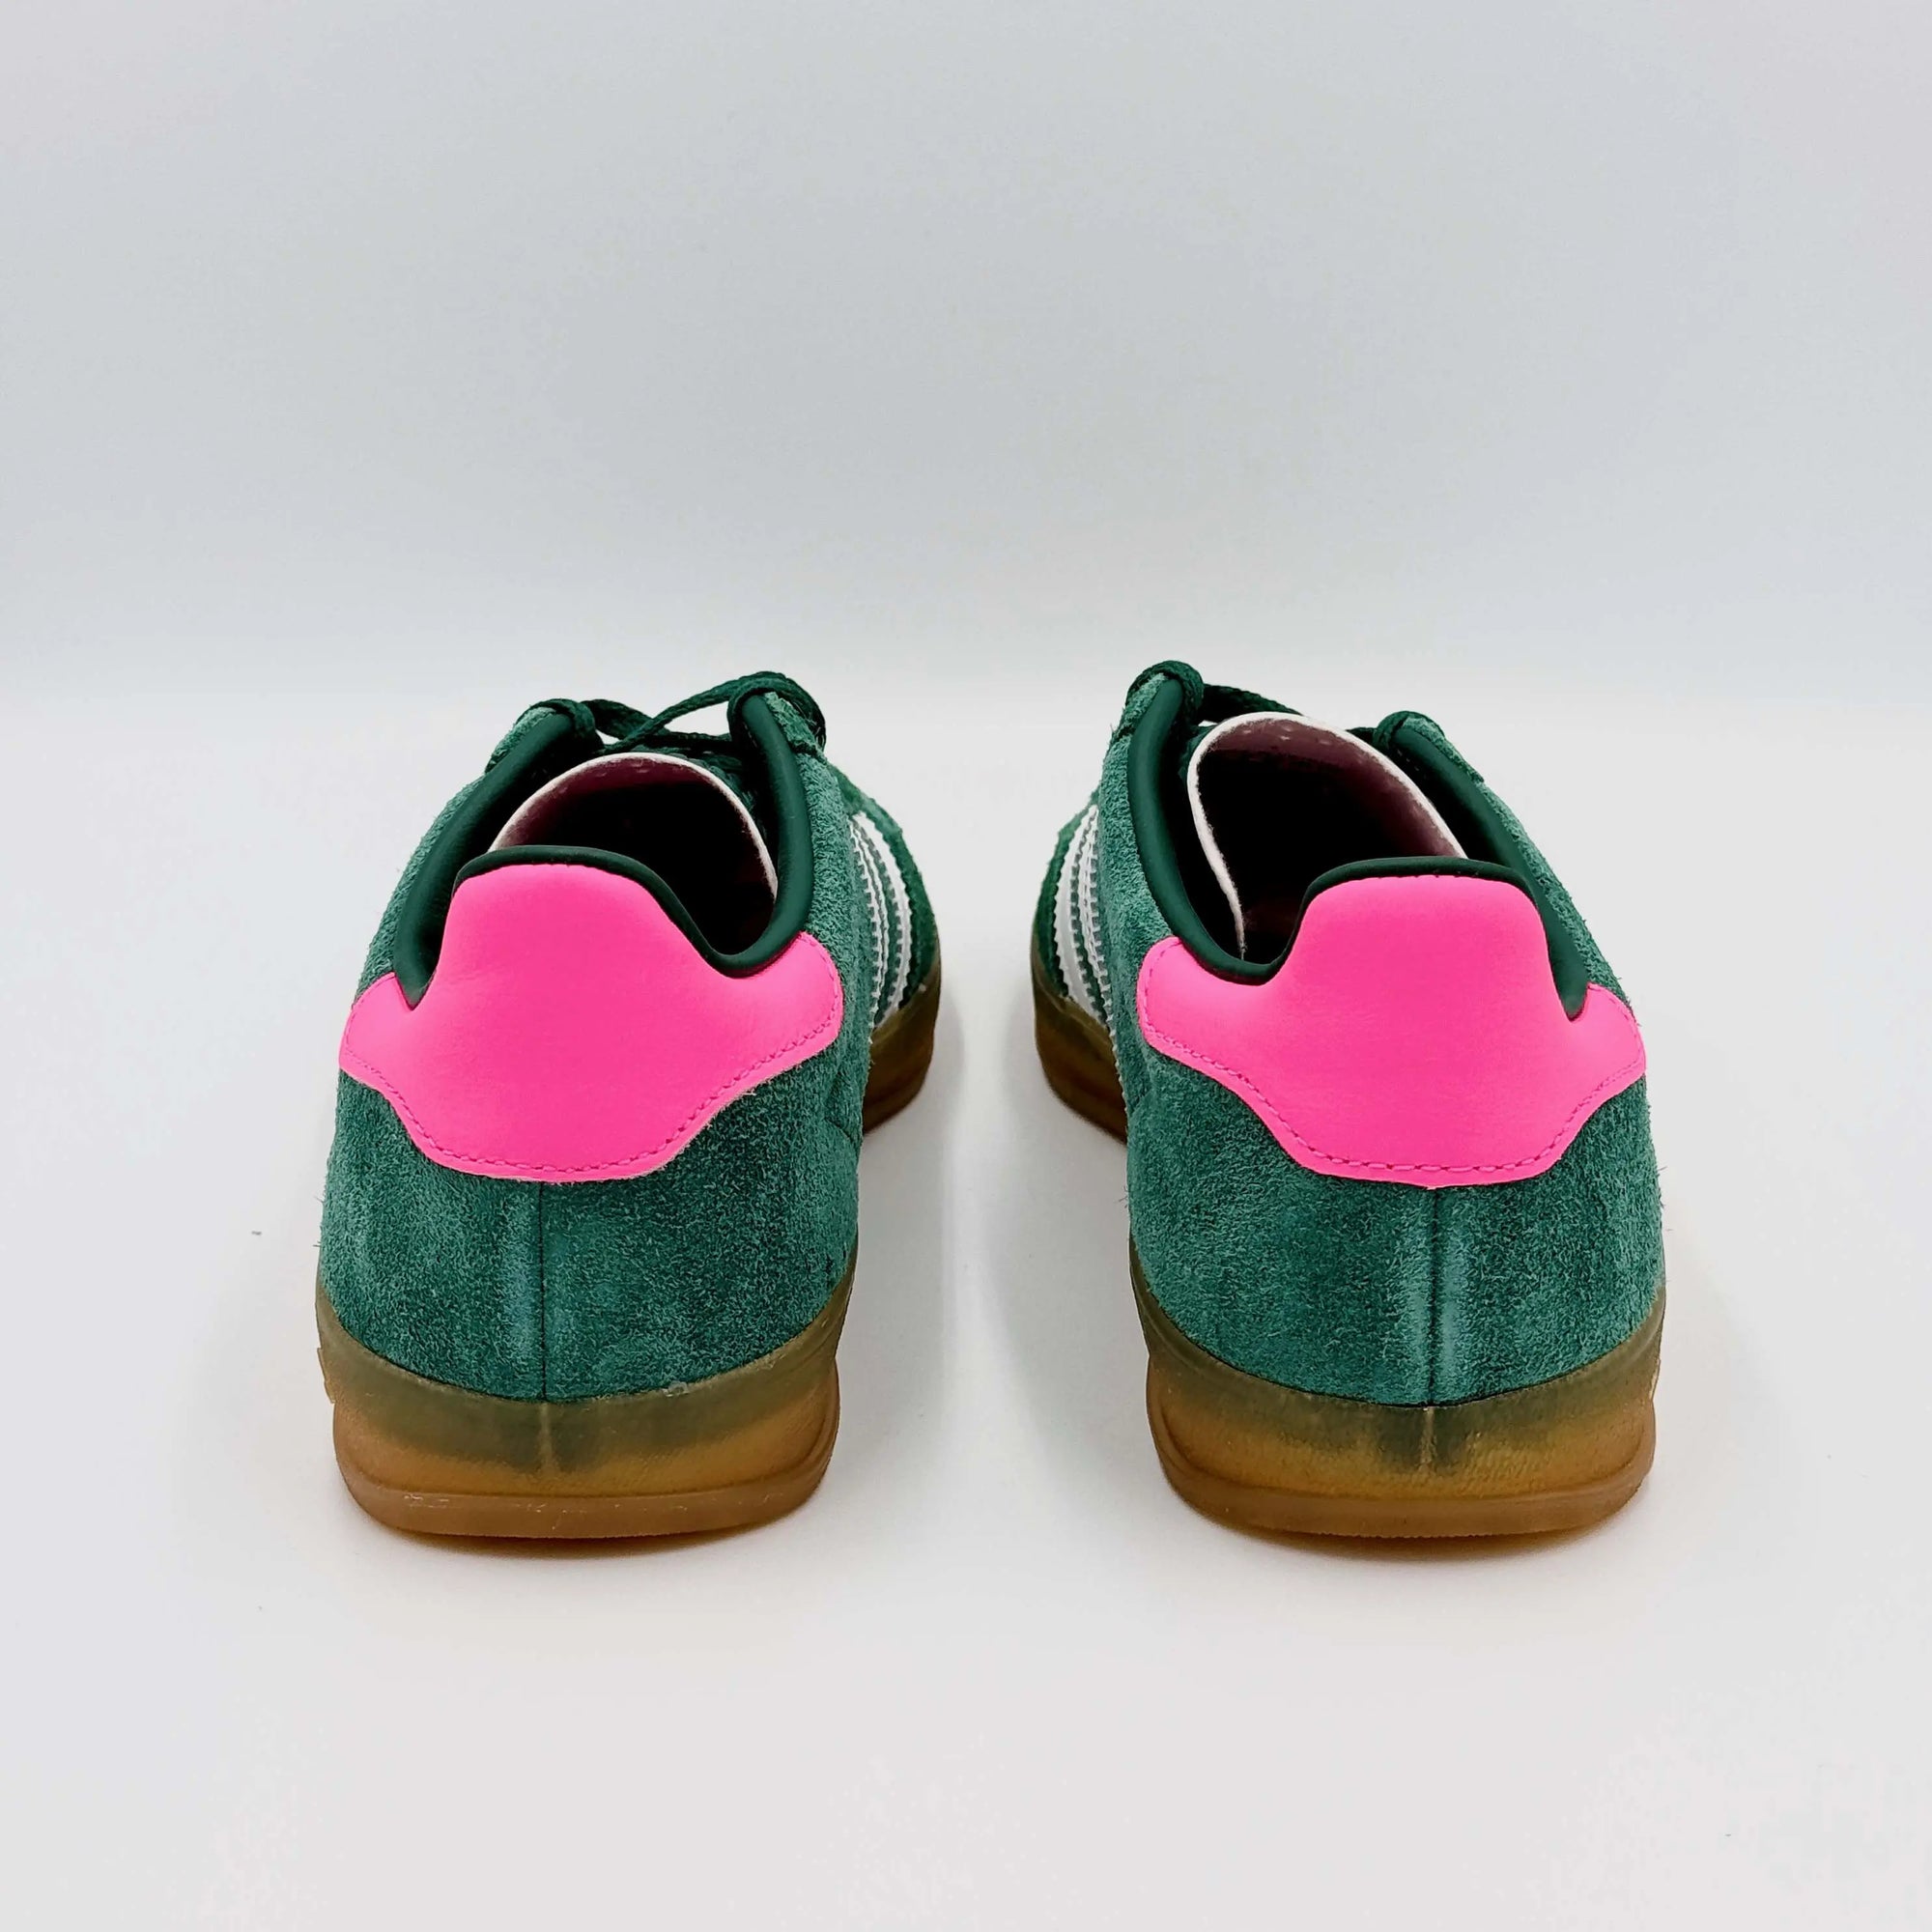 Adidas Gazelle Indoor Collegiate Green Lucid Pink  SA Sneakers